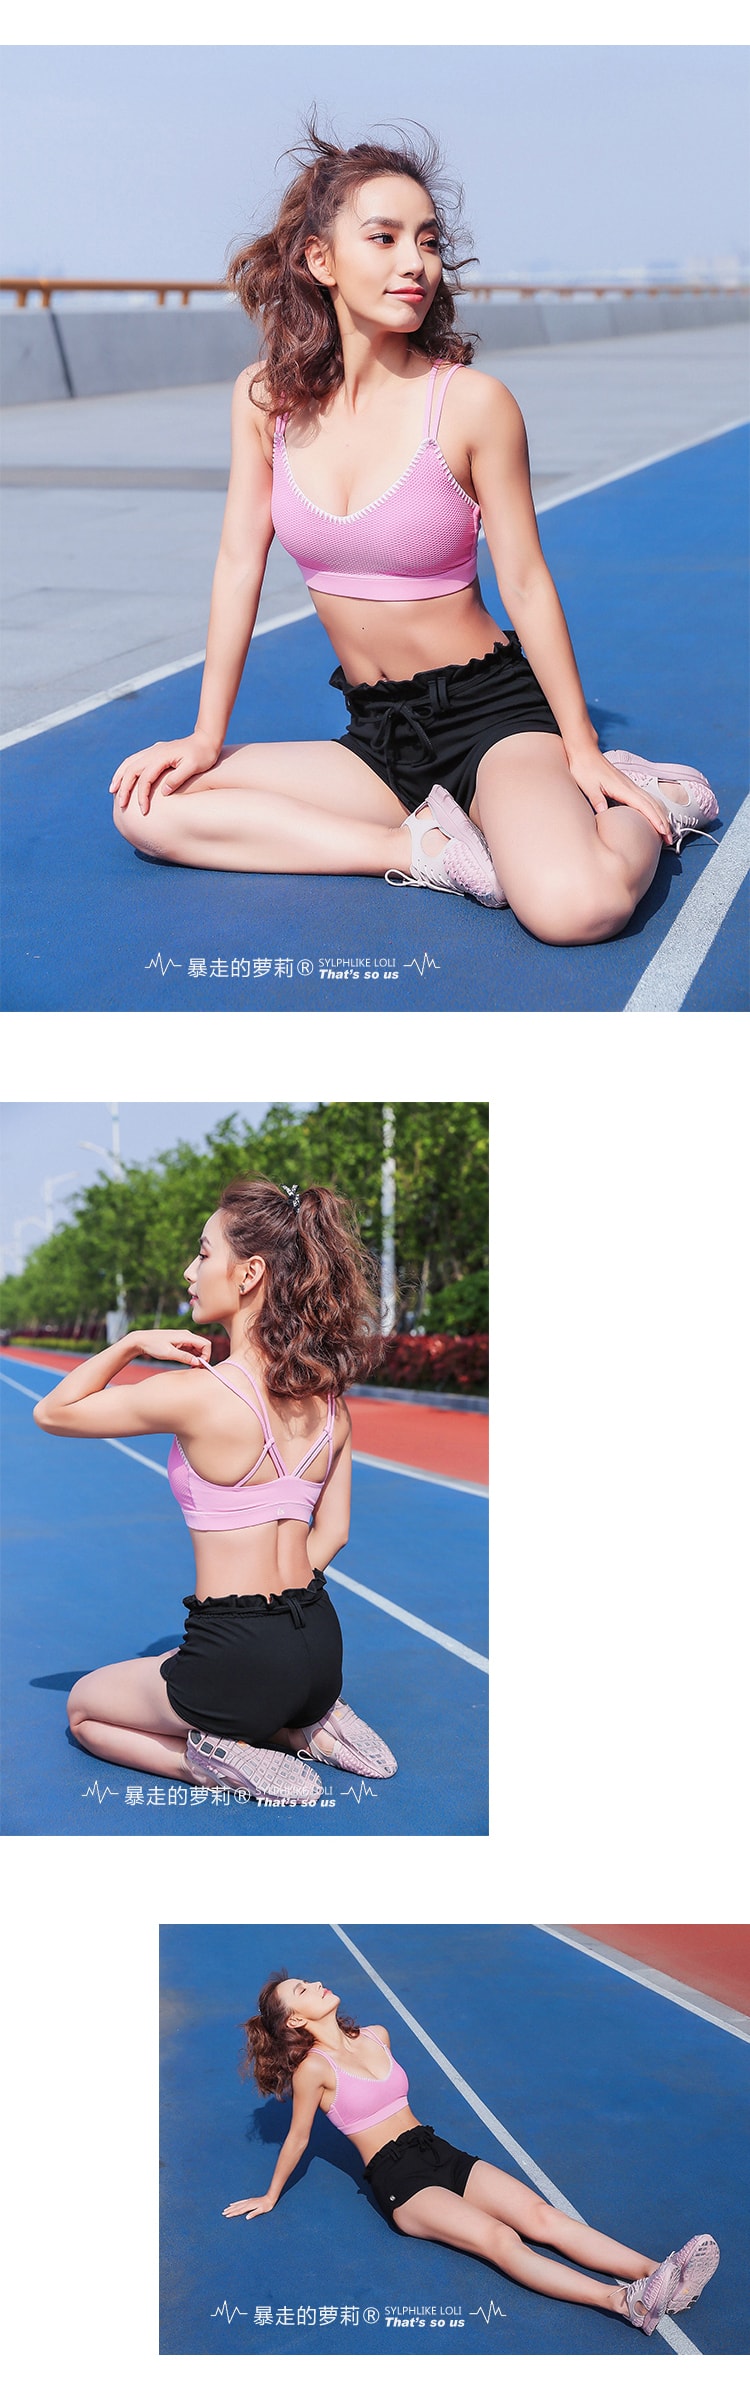 Sports Double Shoulder Bra For Yoga Fitness Train/Blue#/M